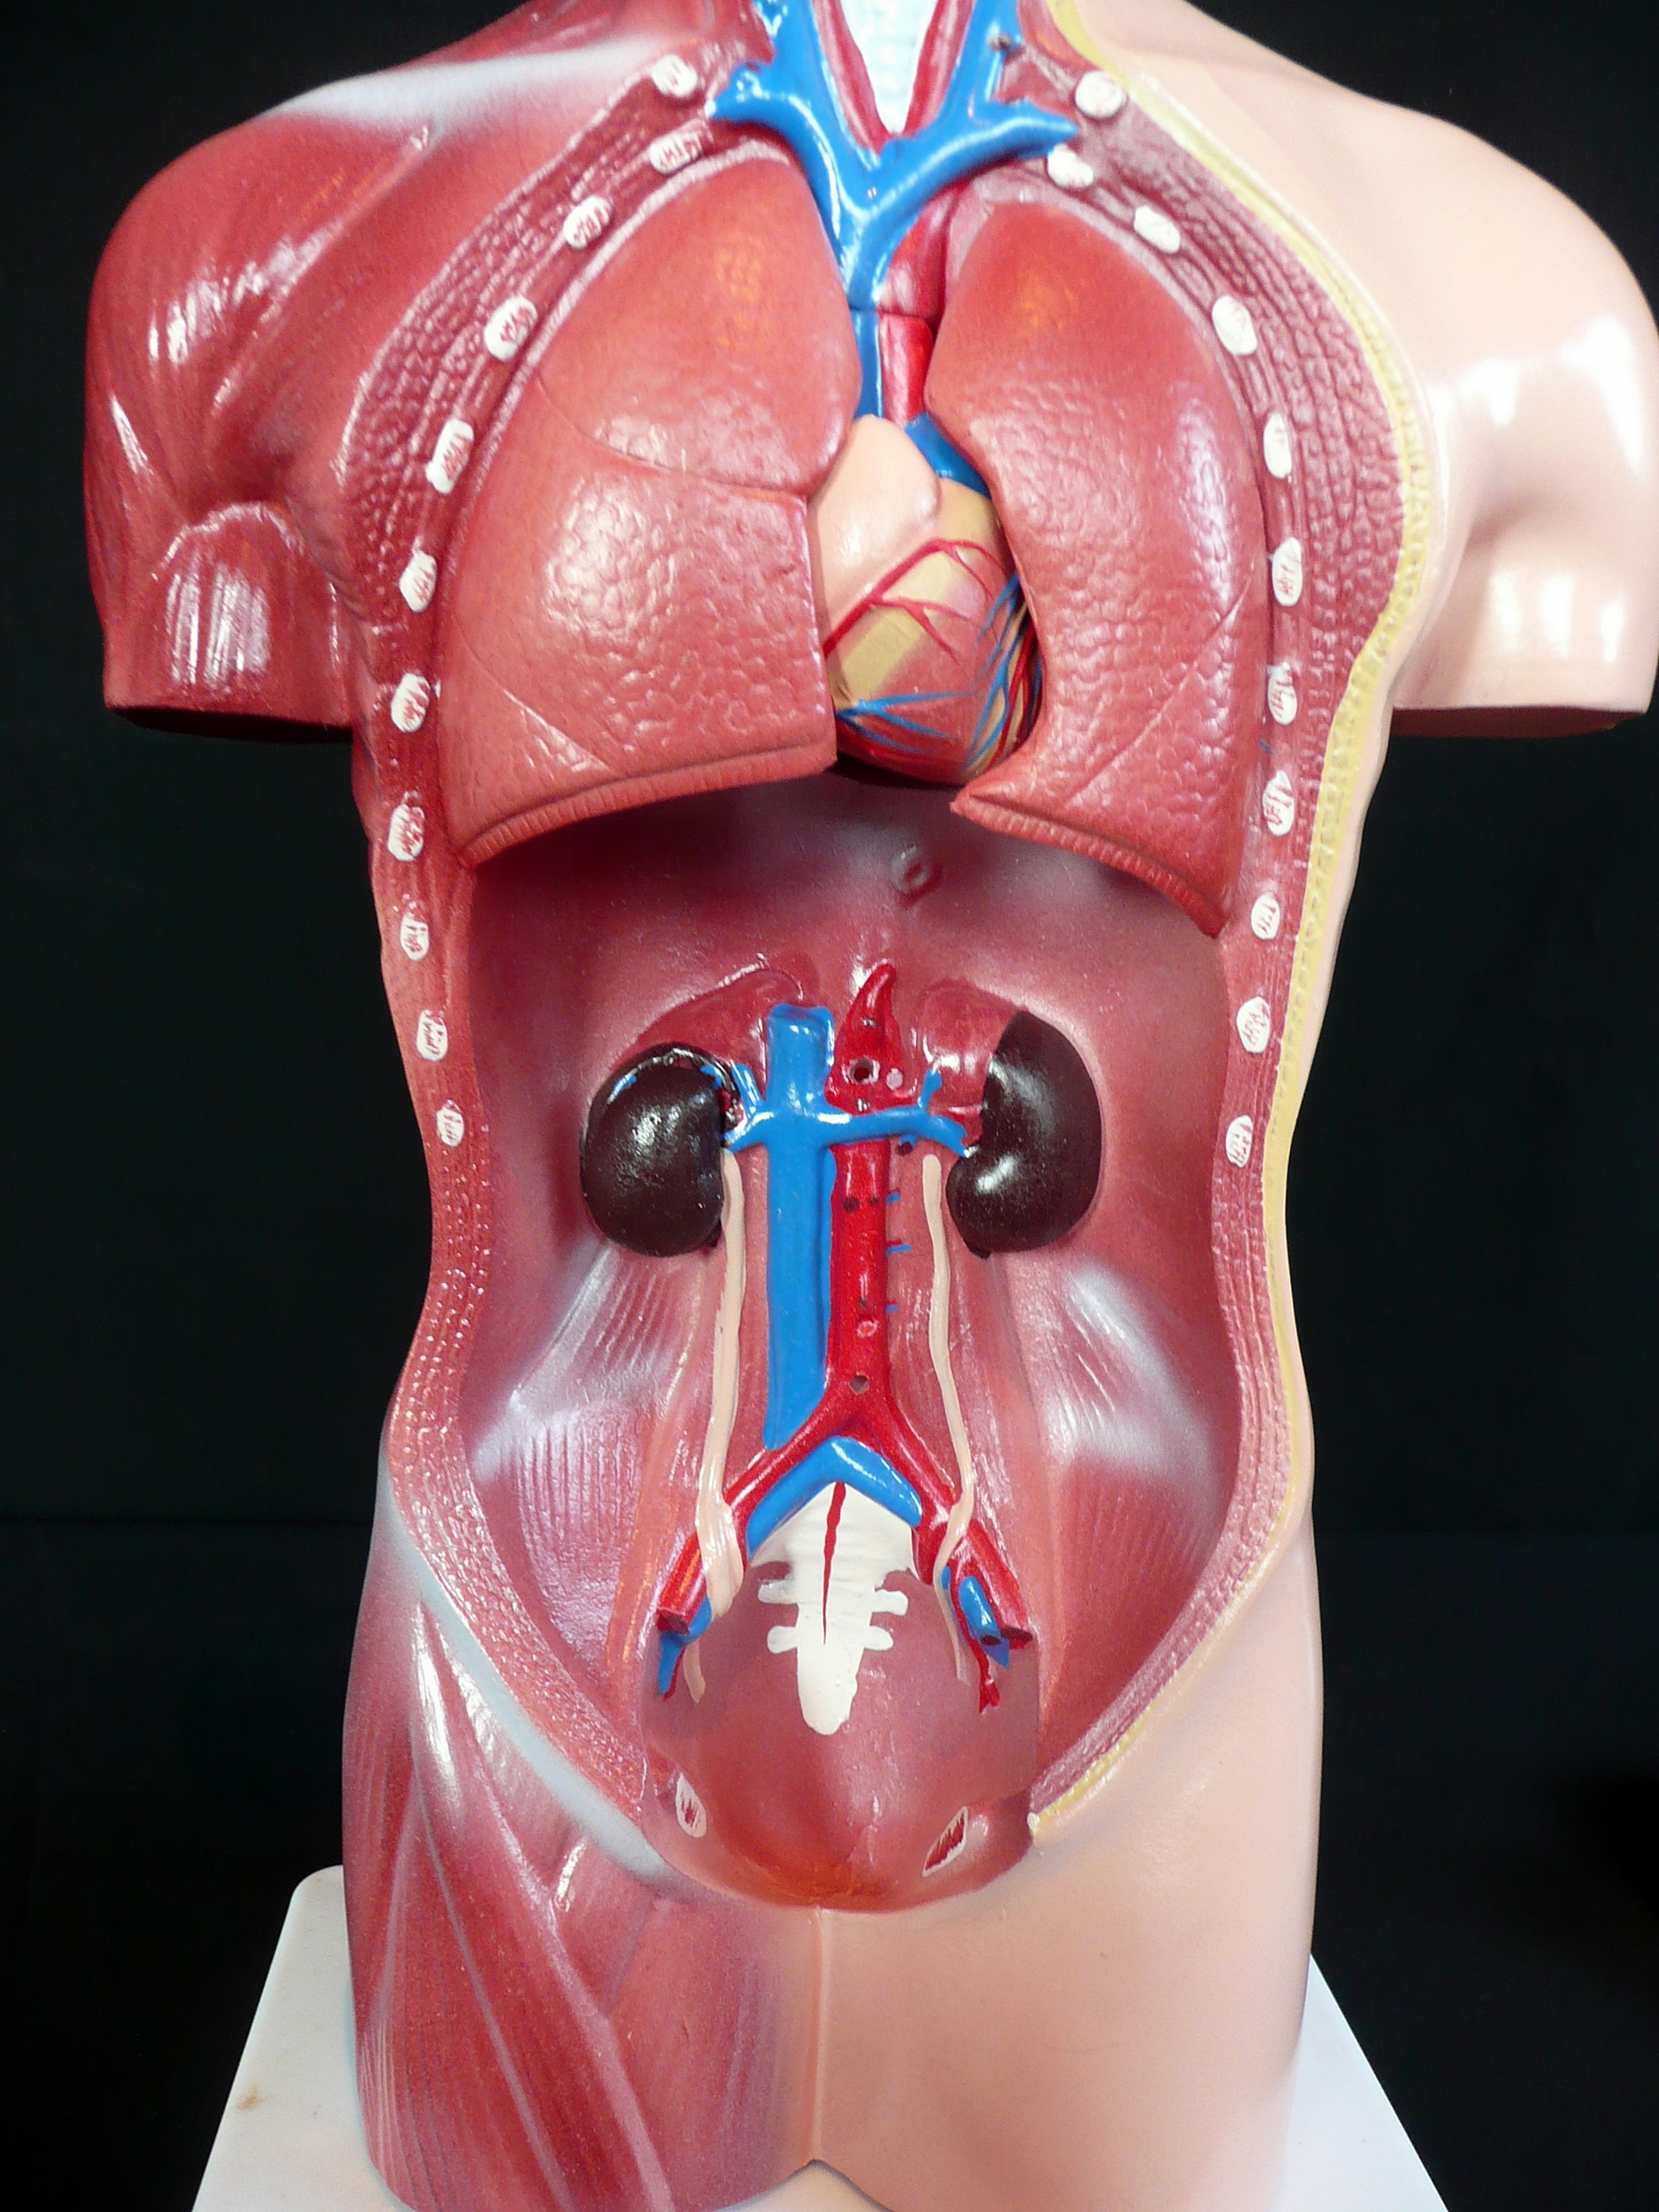 42cm Tall Human Anatomical Female Torso Model | Torso ...